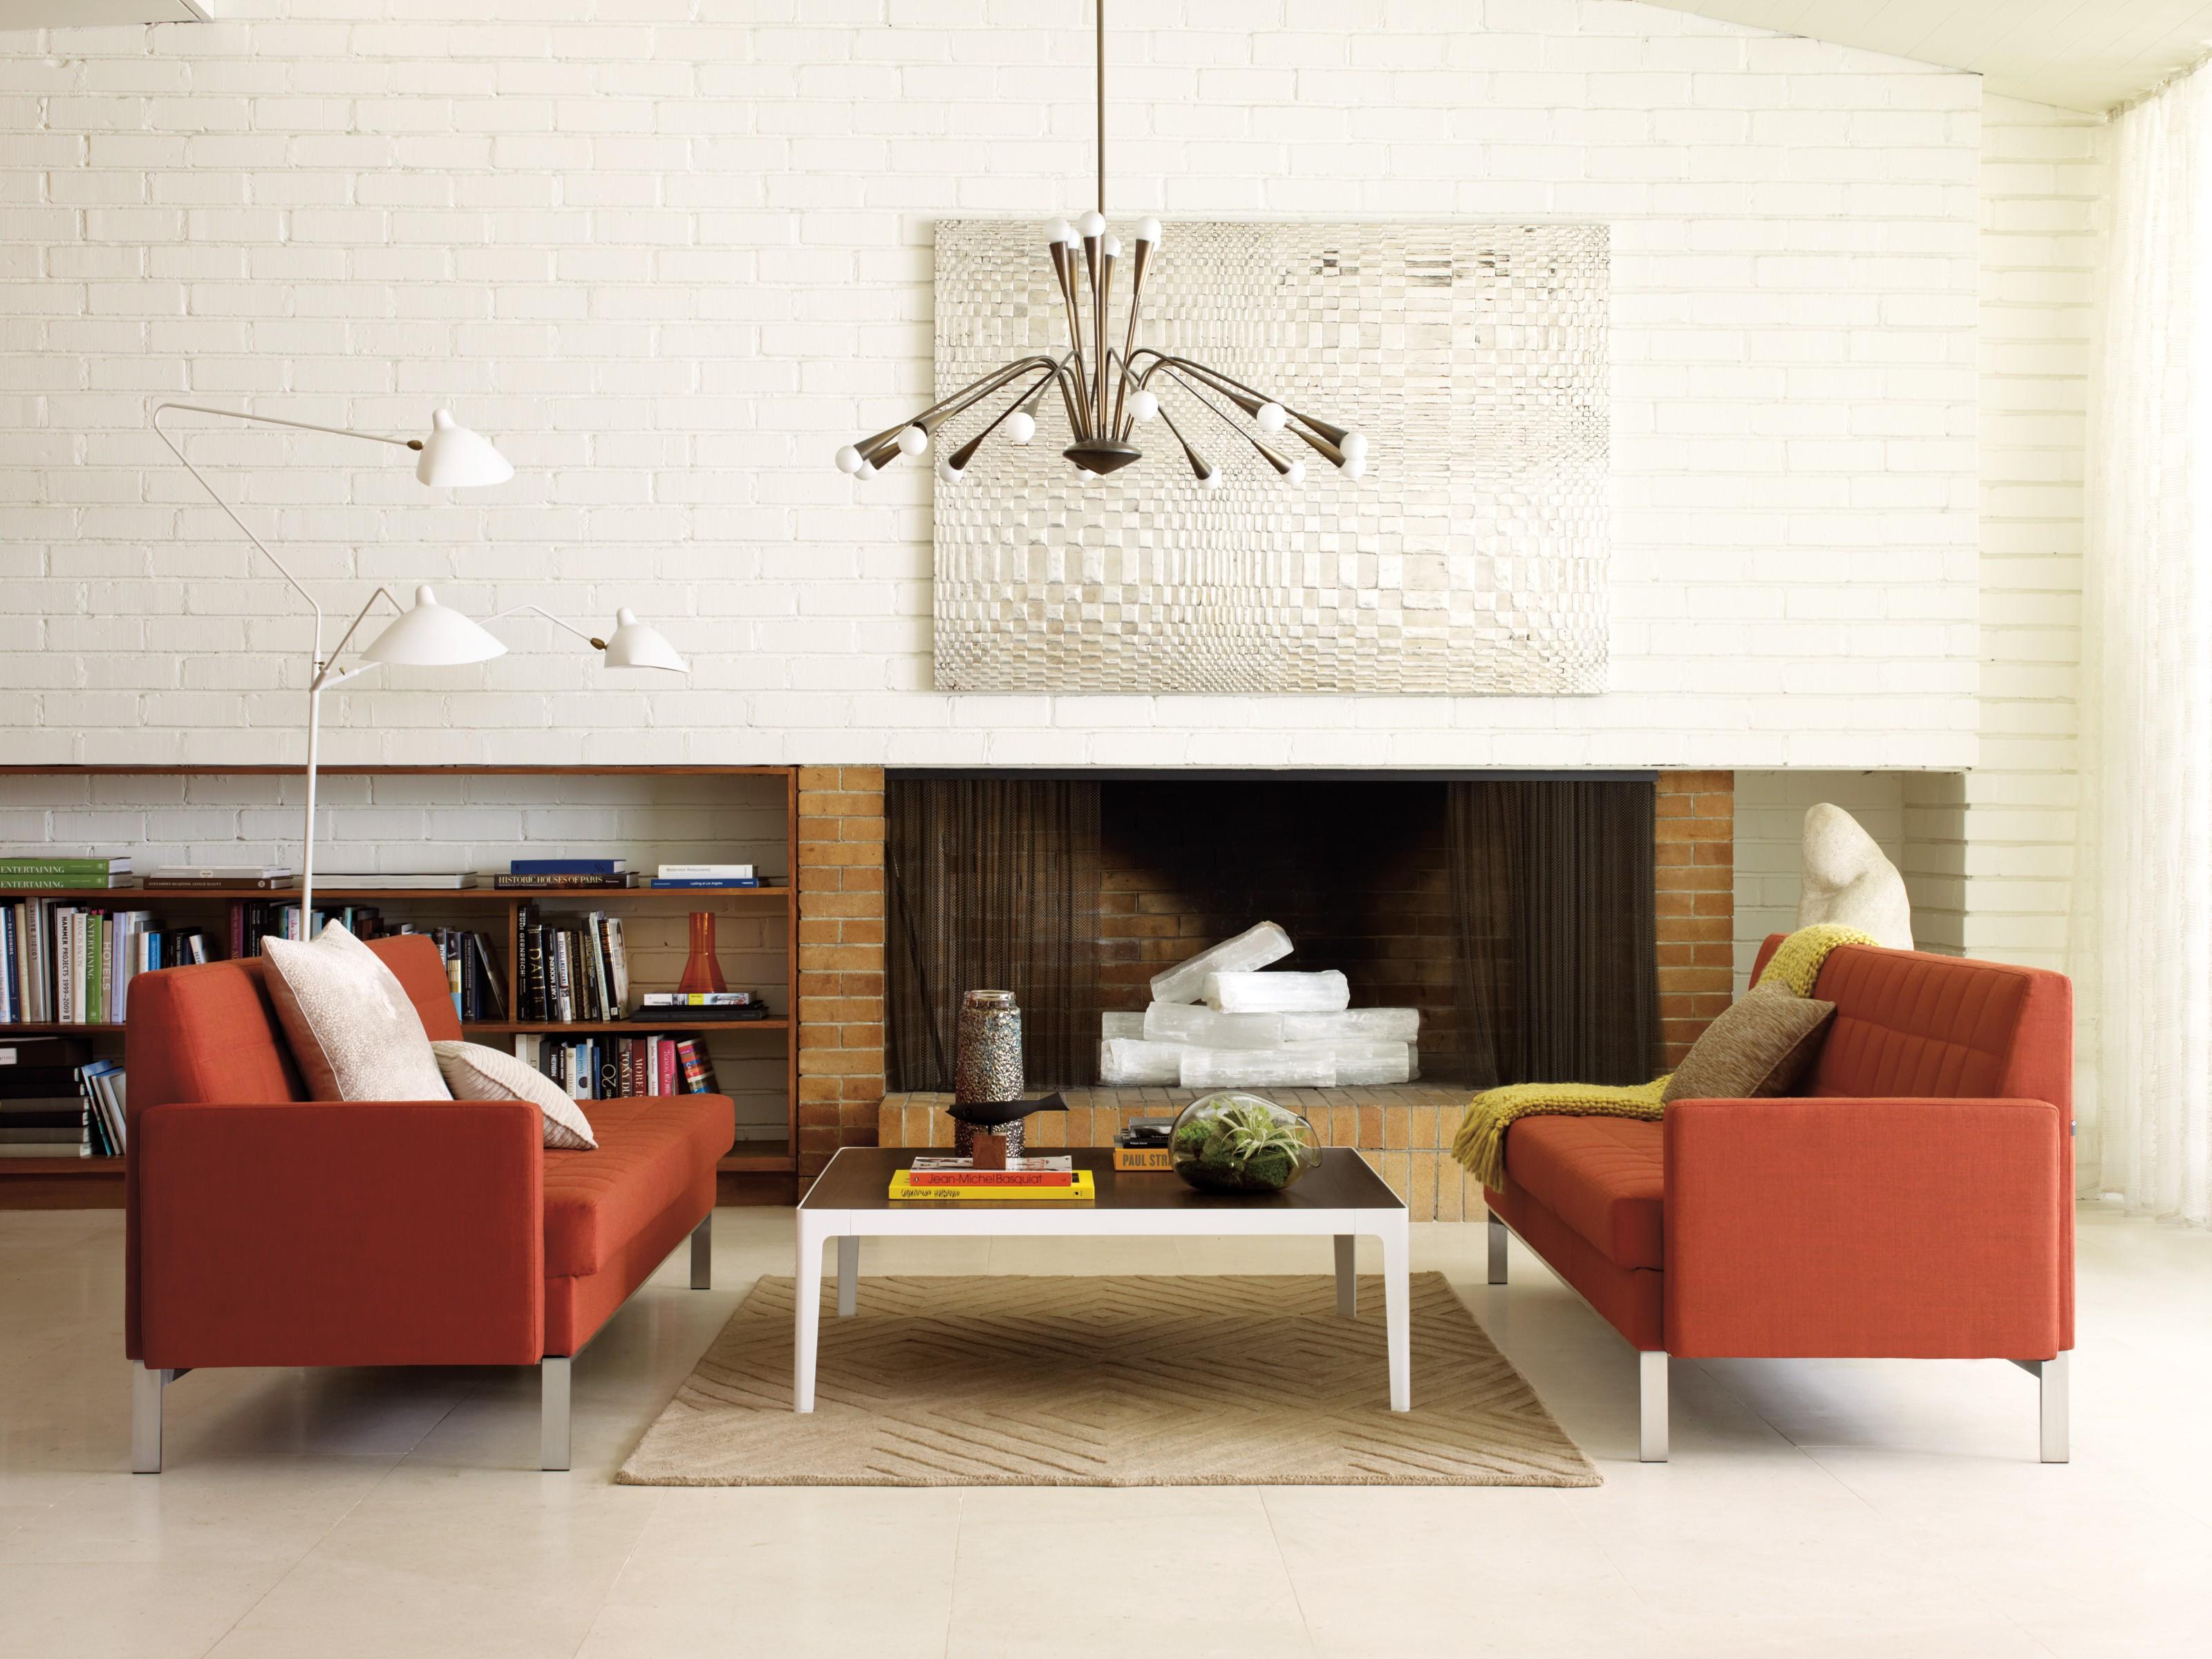 Klassische Sitzecke mit roten Sofas #regal #teppich #kamin #tagesdecke #pendelleuchte #sofa #rotessofa ©Coalesse